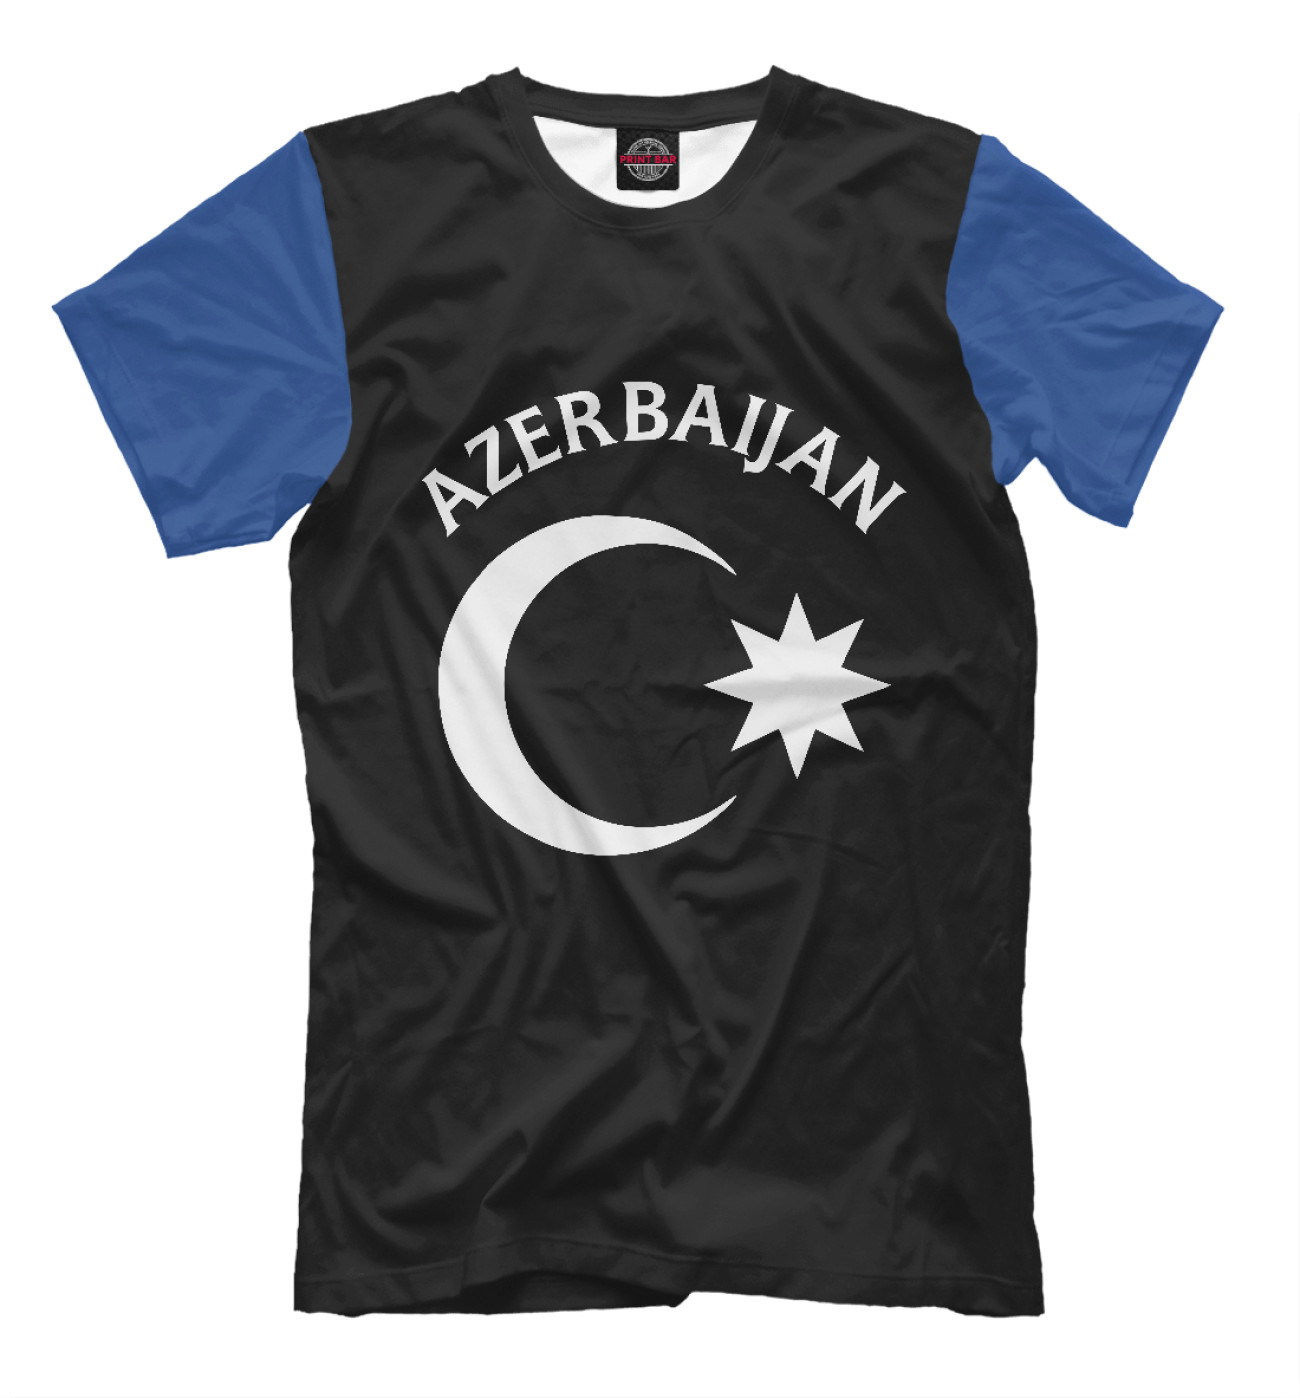 Мужская Футболка Азербайджан, артикул: AZR-189863-fut-2